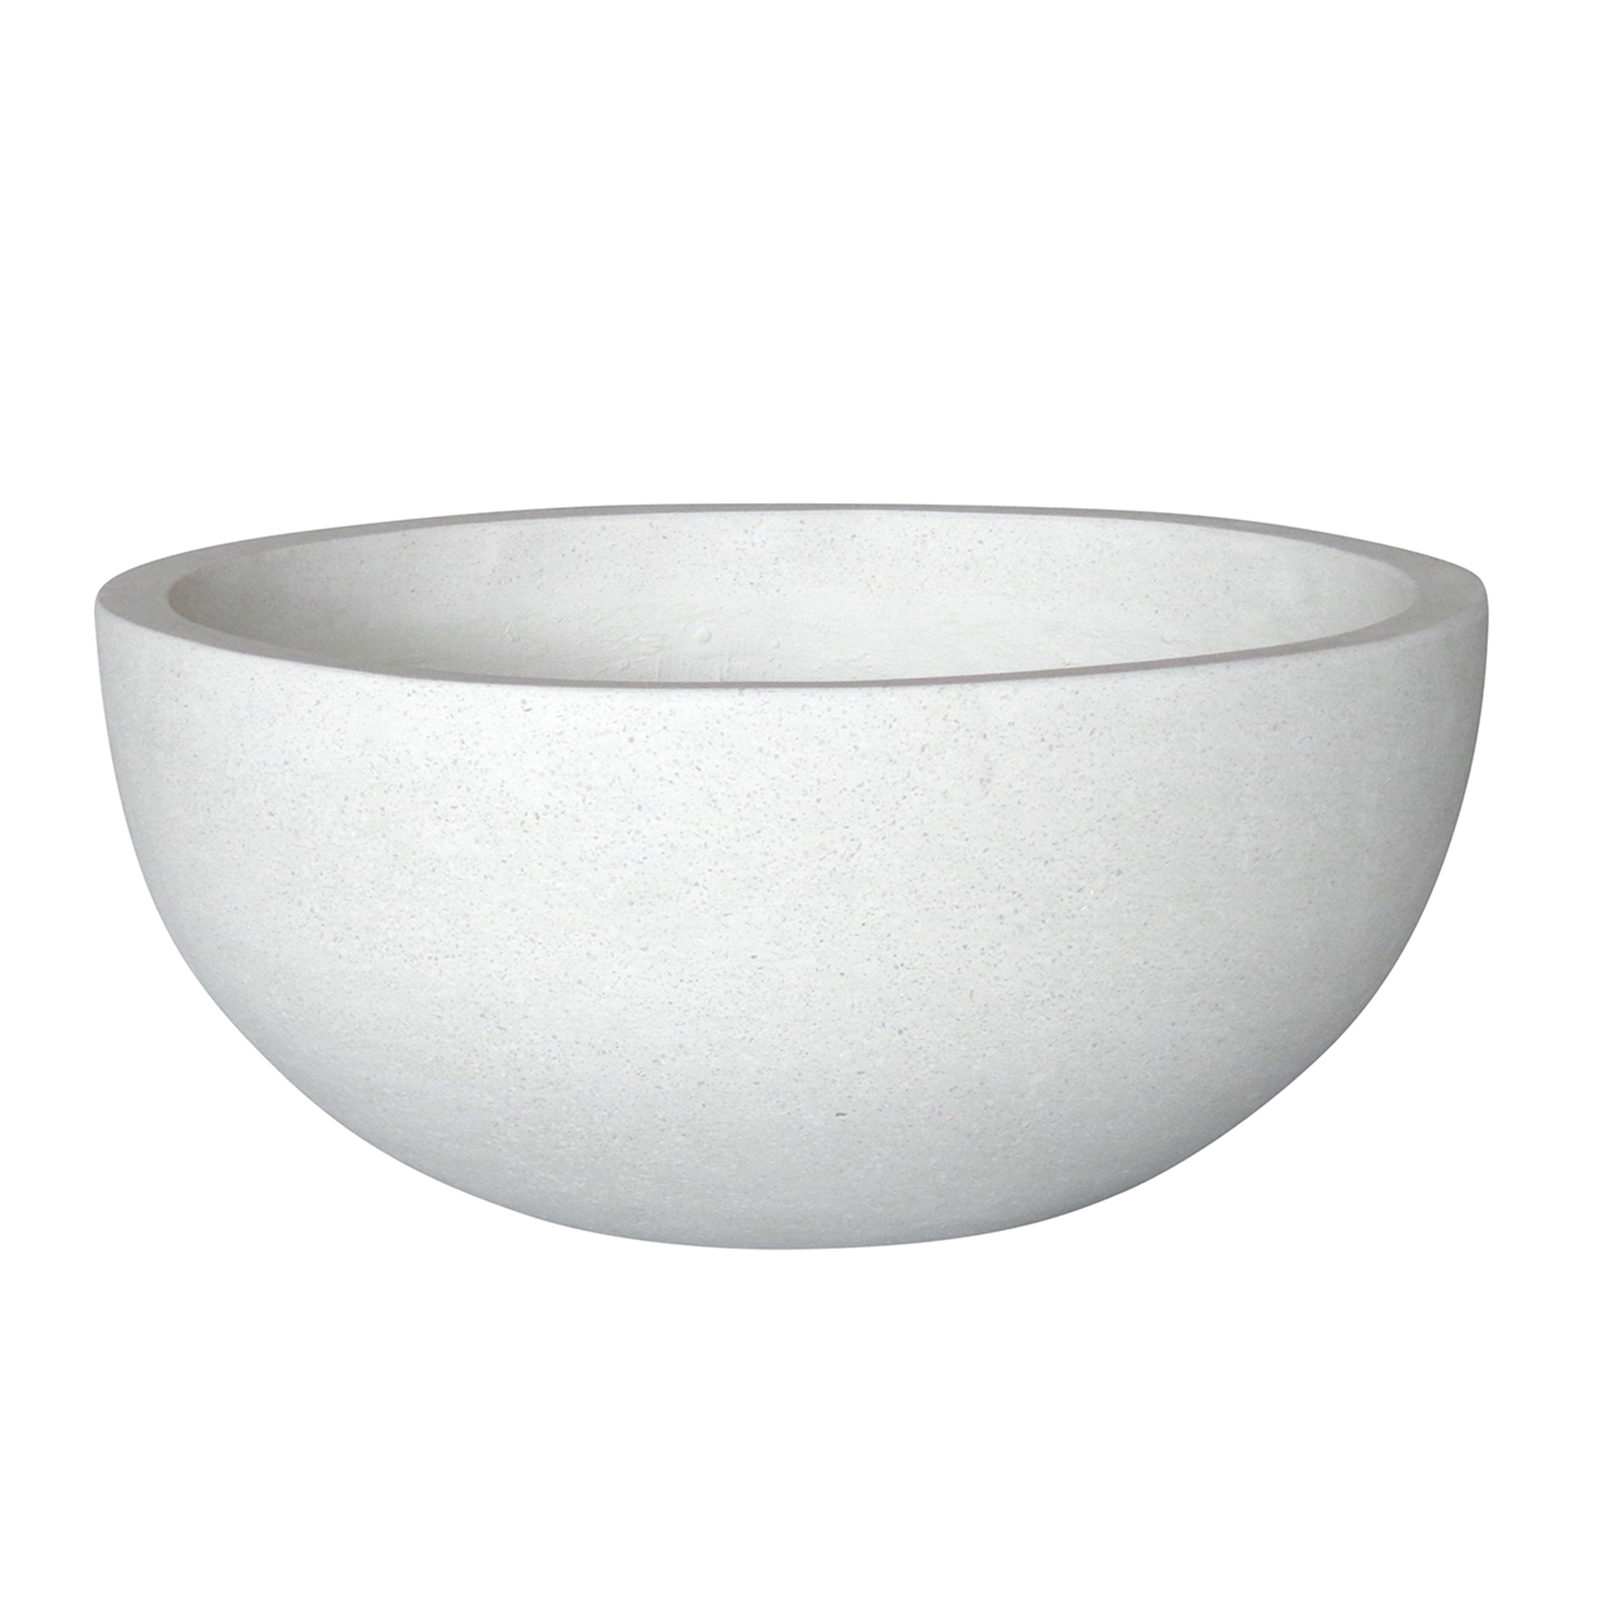 Northcote Pottery White Precinct Lite Omni Bowl - Medium